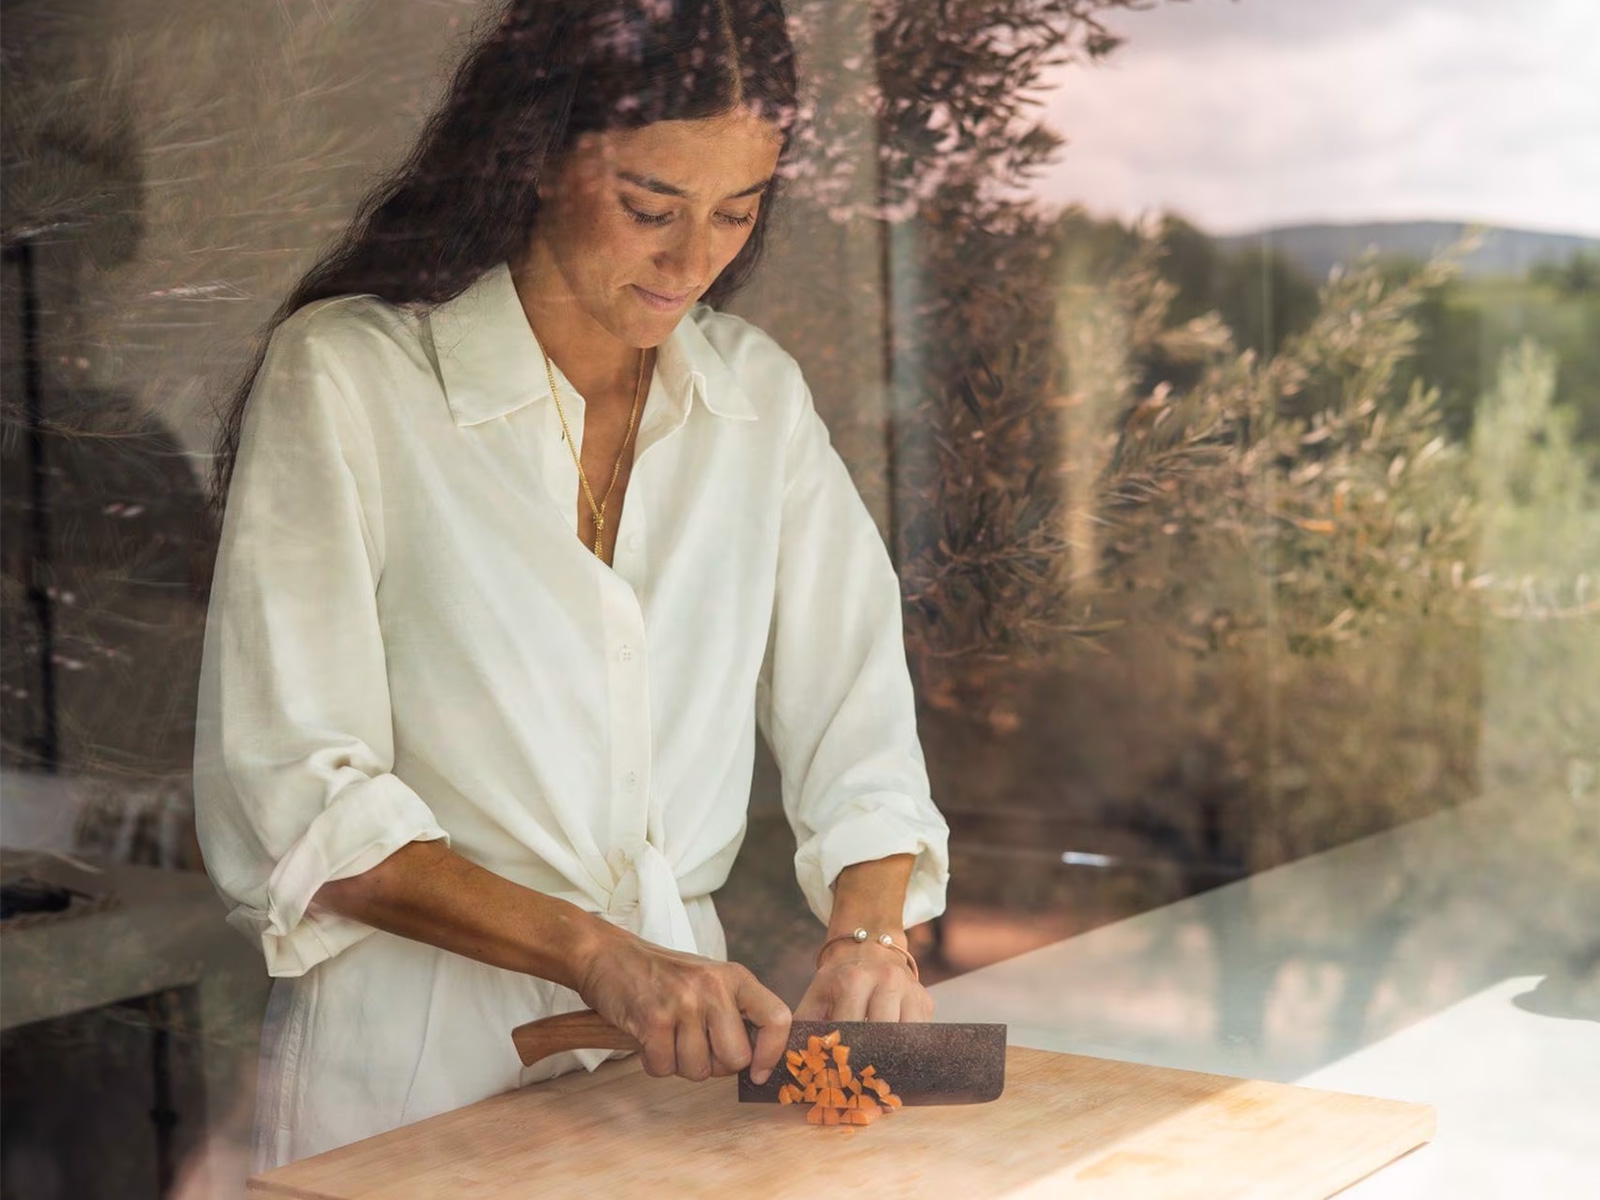 Maria Lo opens the doors of her gastronomic universe in ‘Lo: coacina, producto, naturaleza’